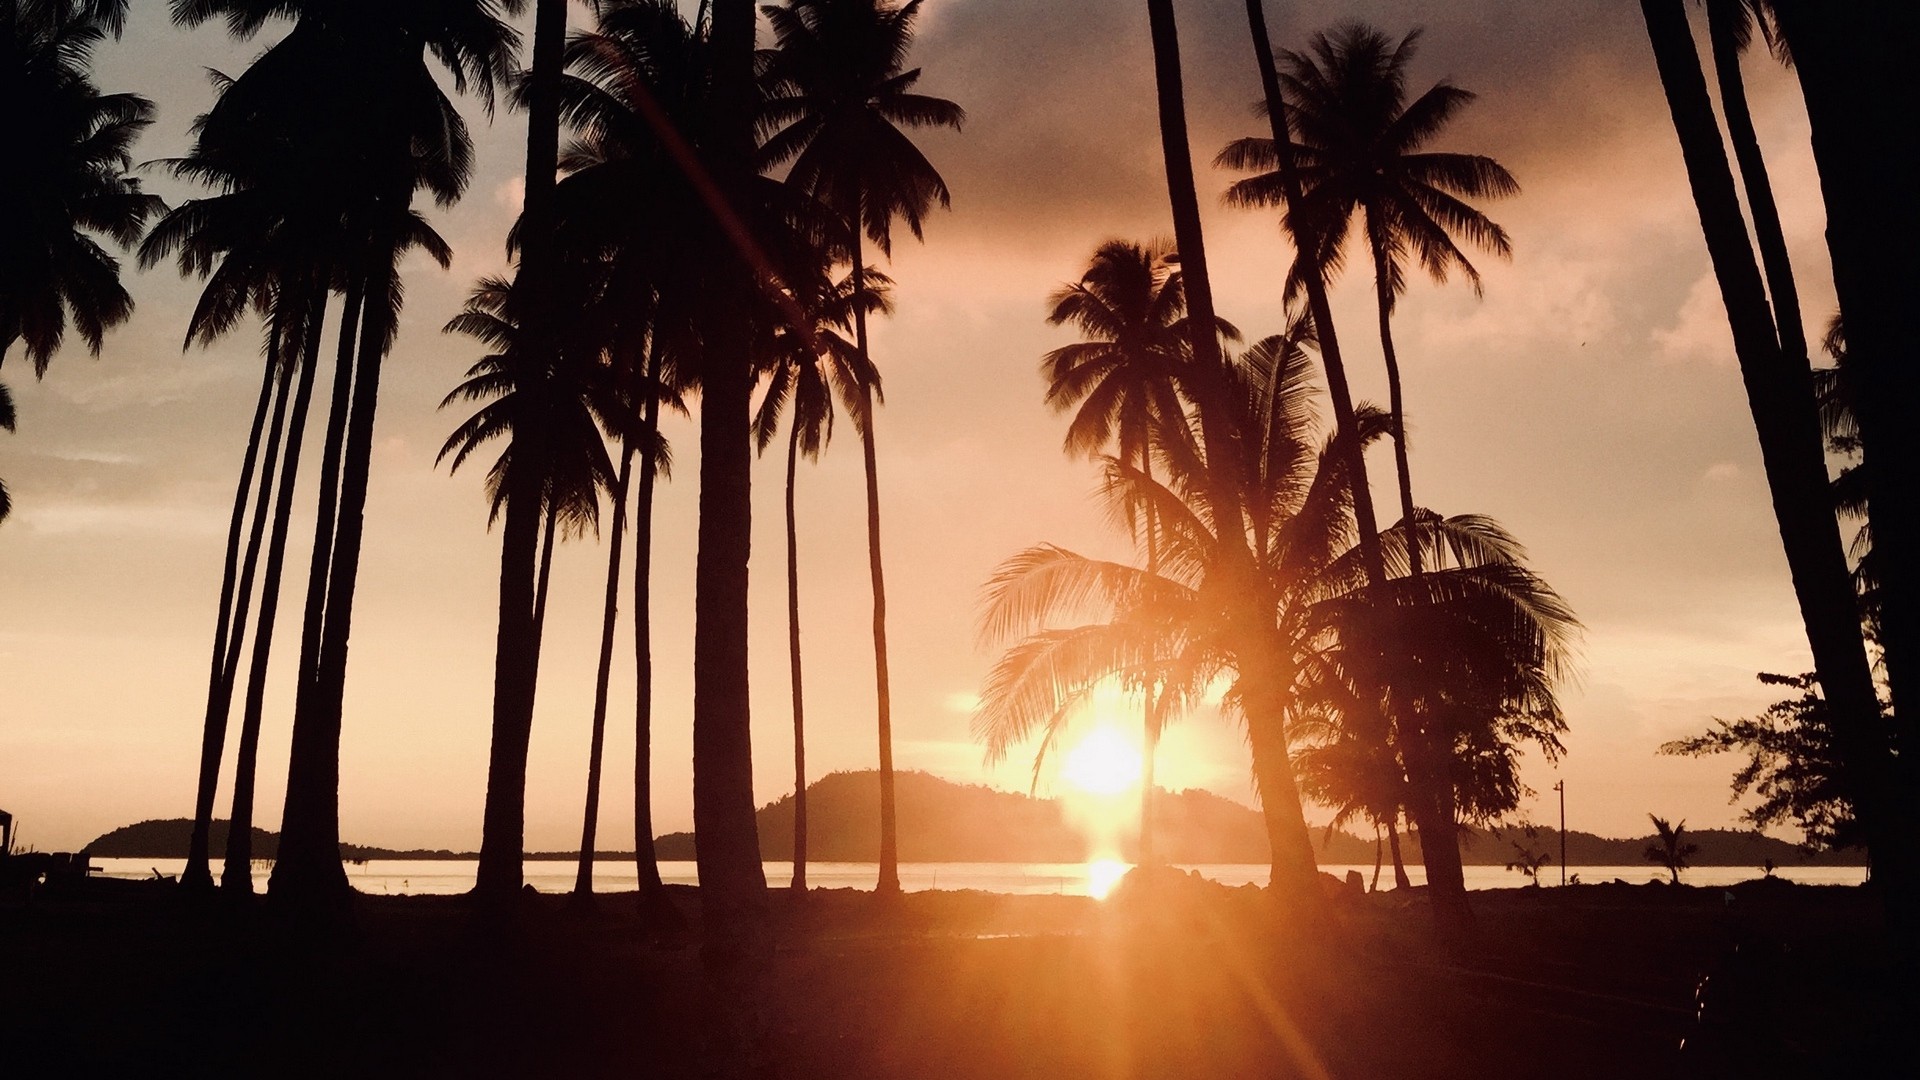 1920x1080 wallpapers: palm trees, sunset, tropics, sunlight, velocidad (image)